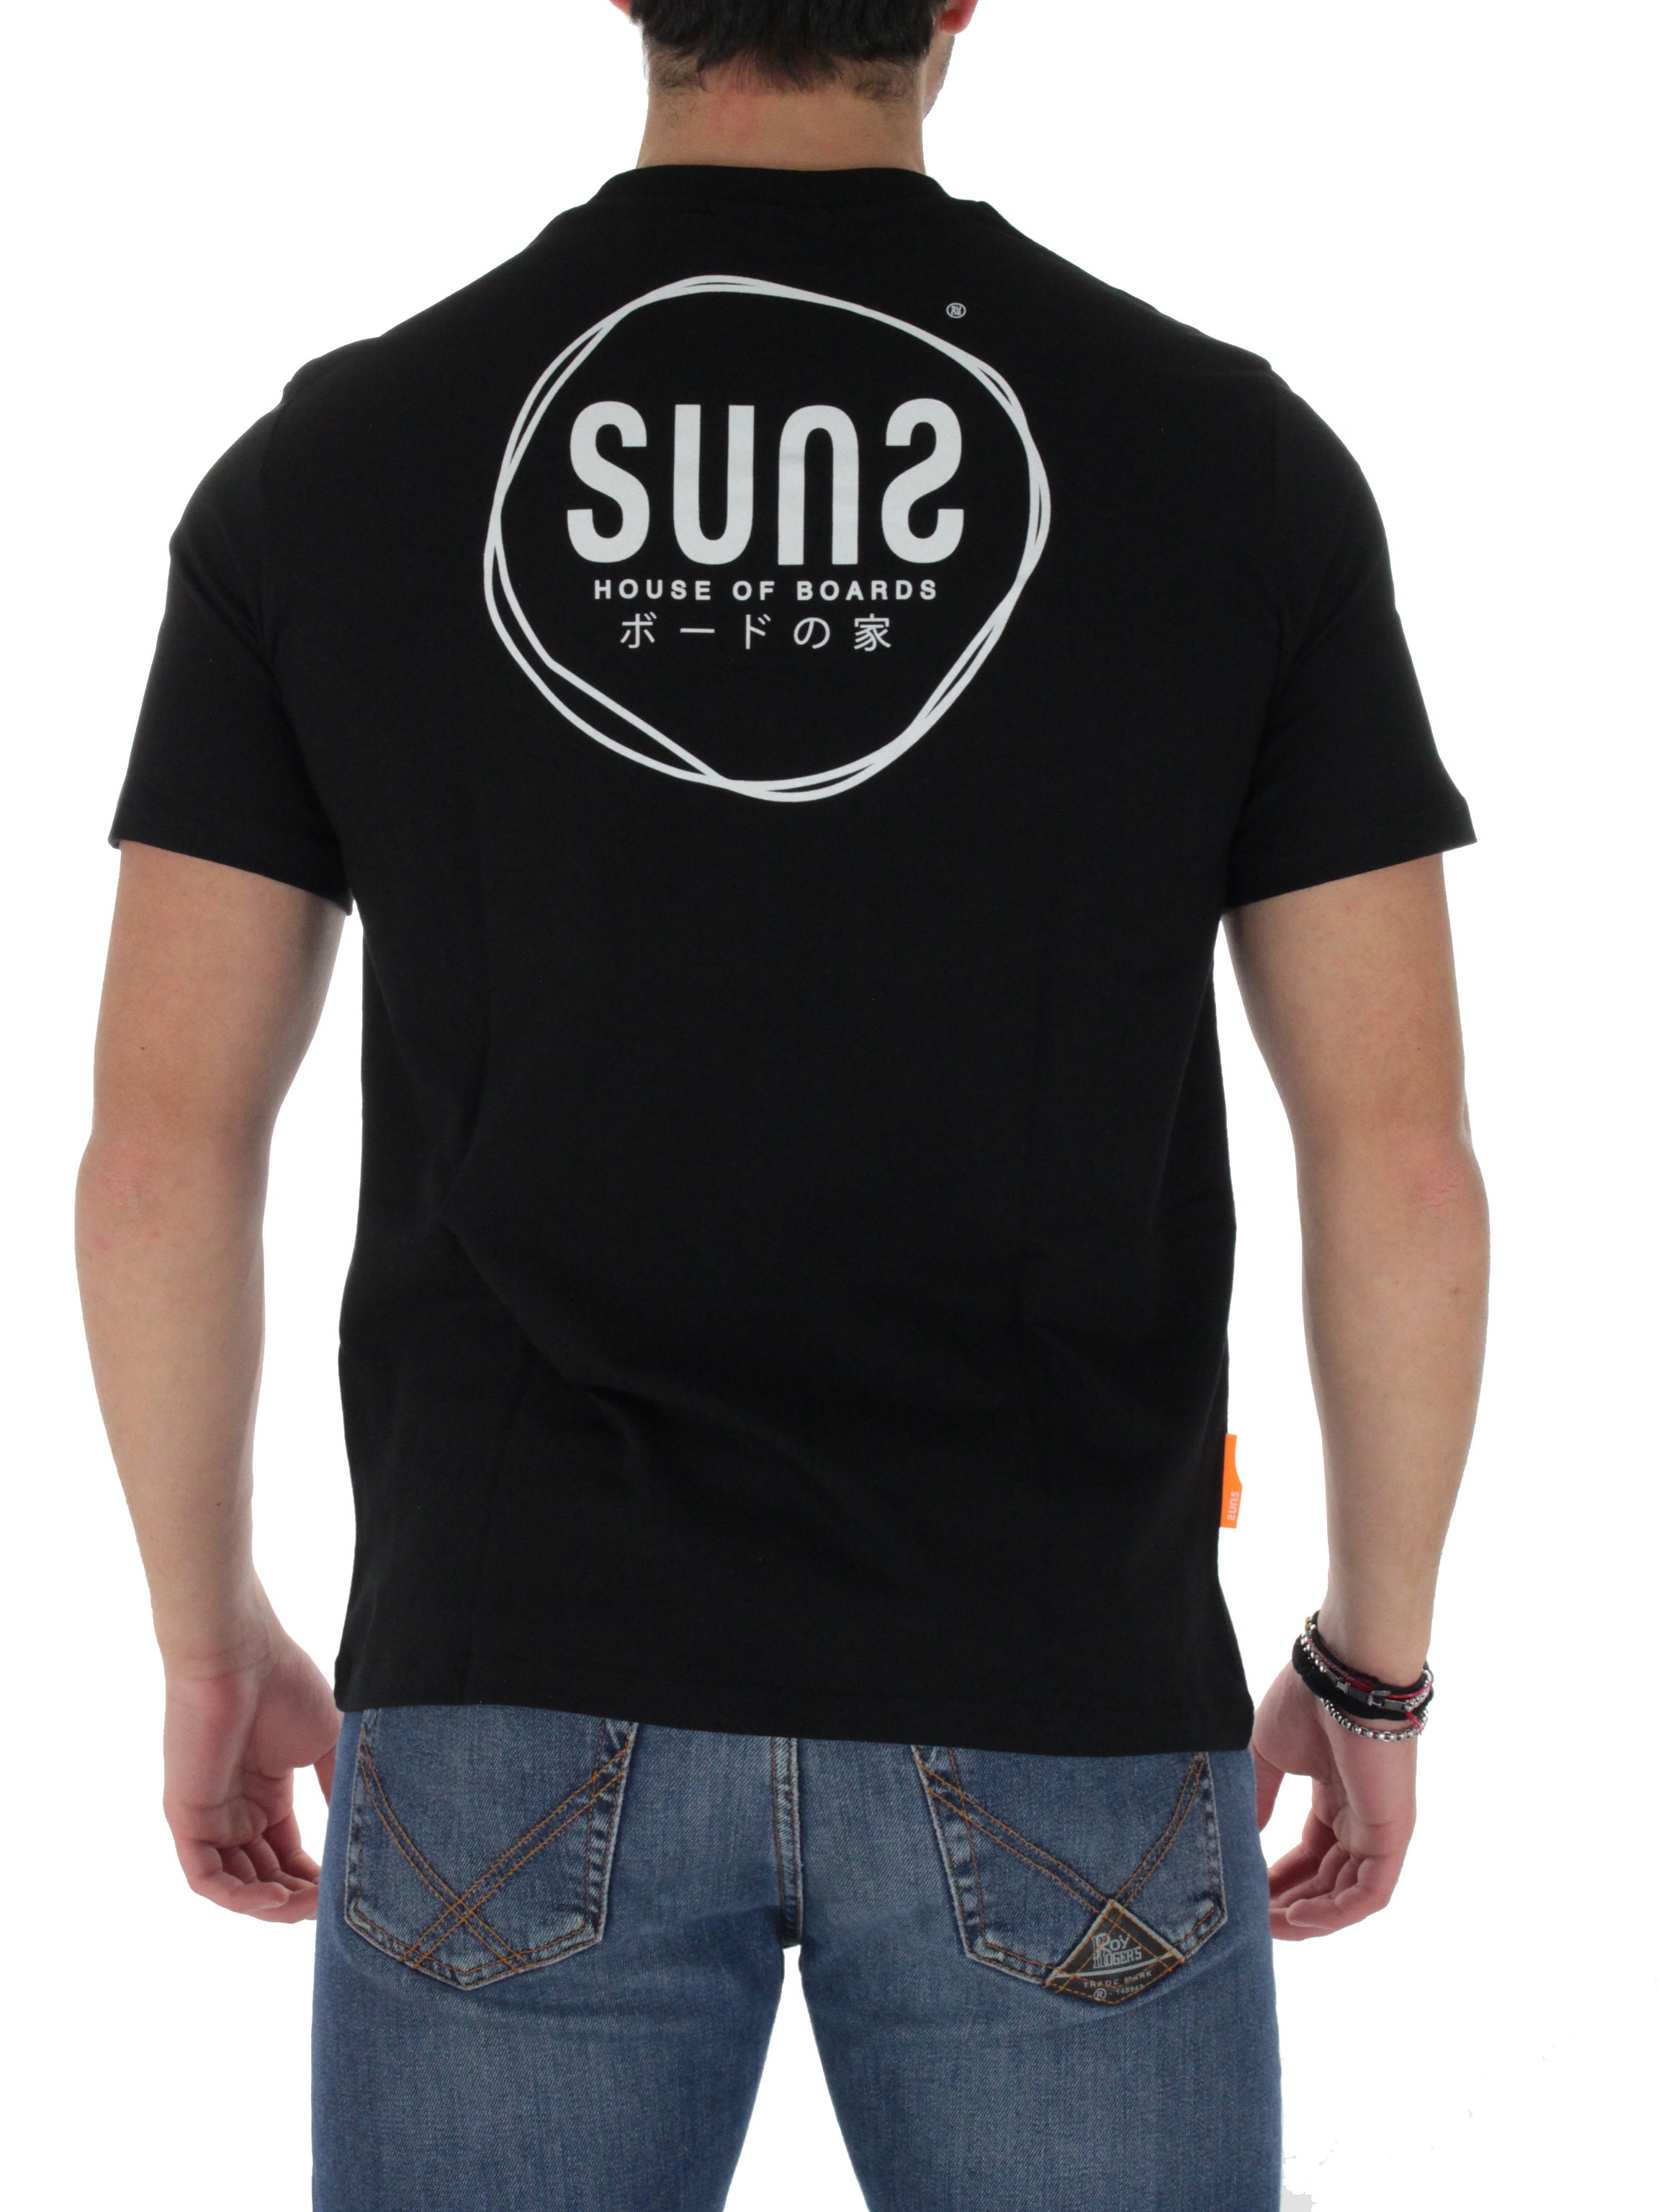 Suns t-shirt paolo pen